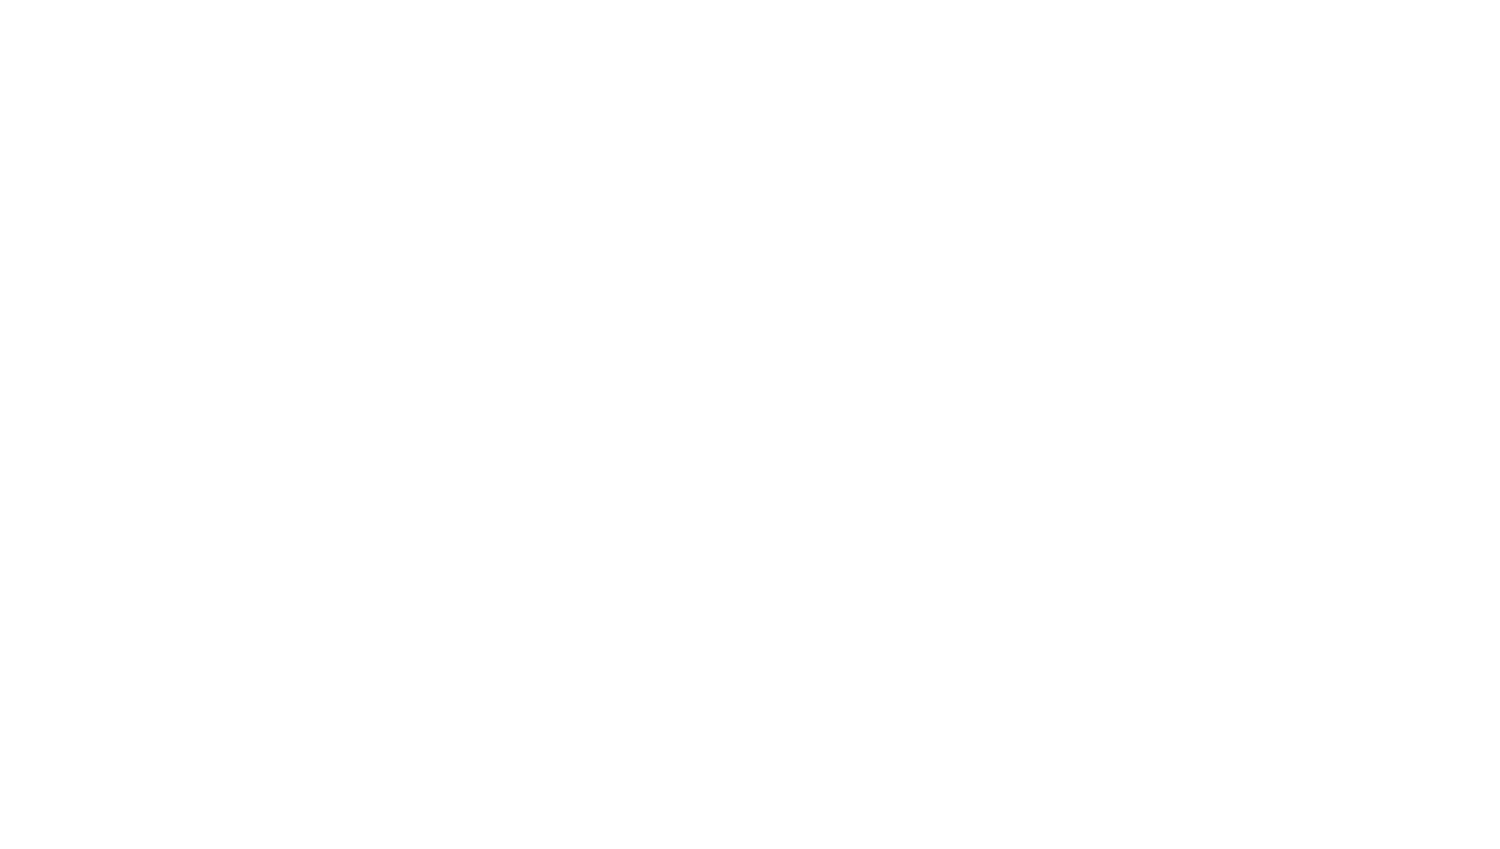 Stewart’s Edge Boer Goats